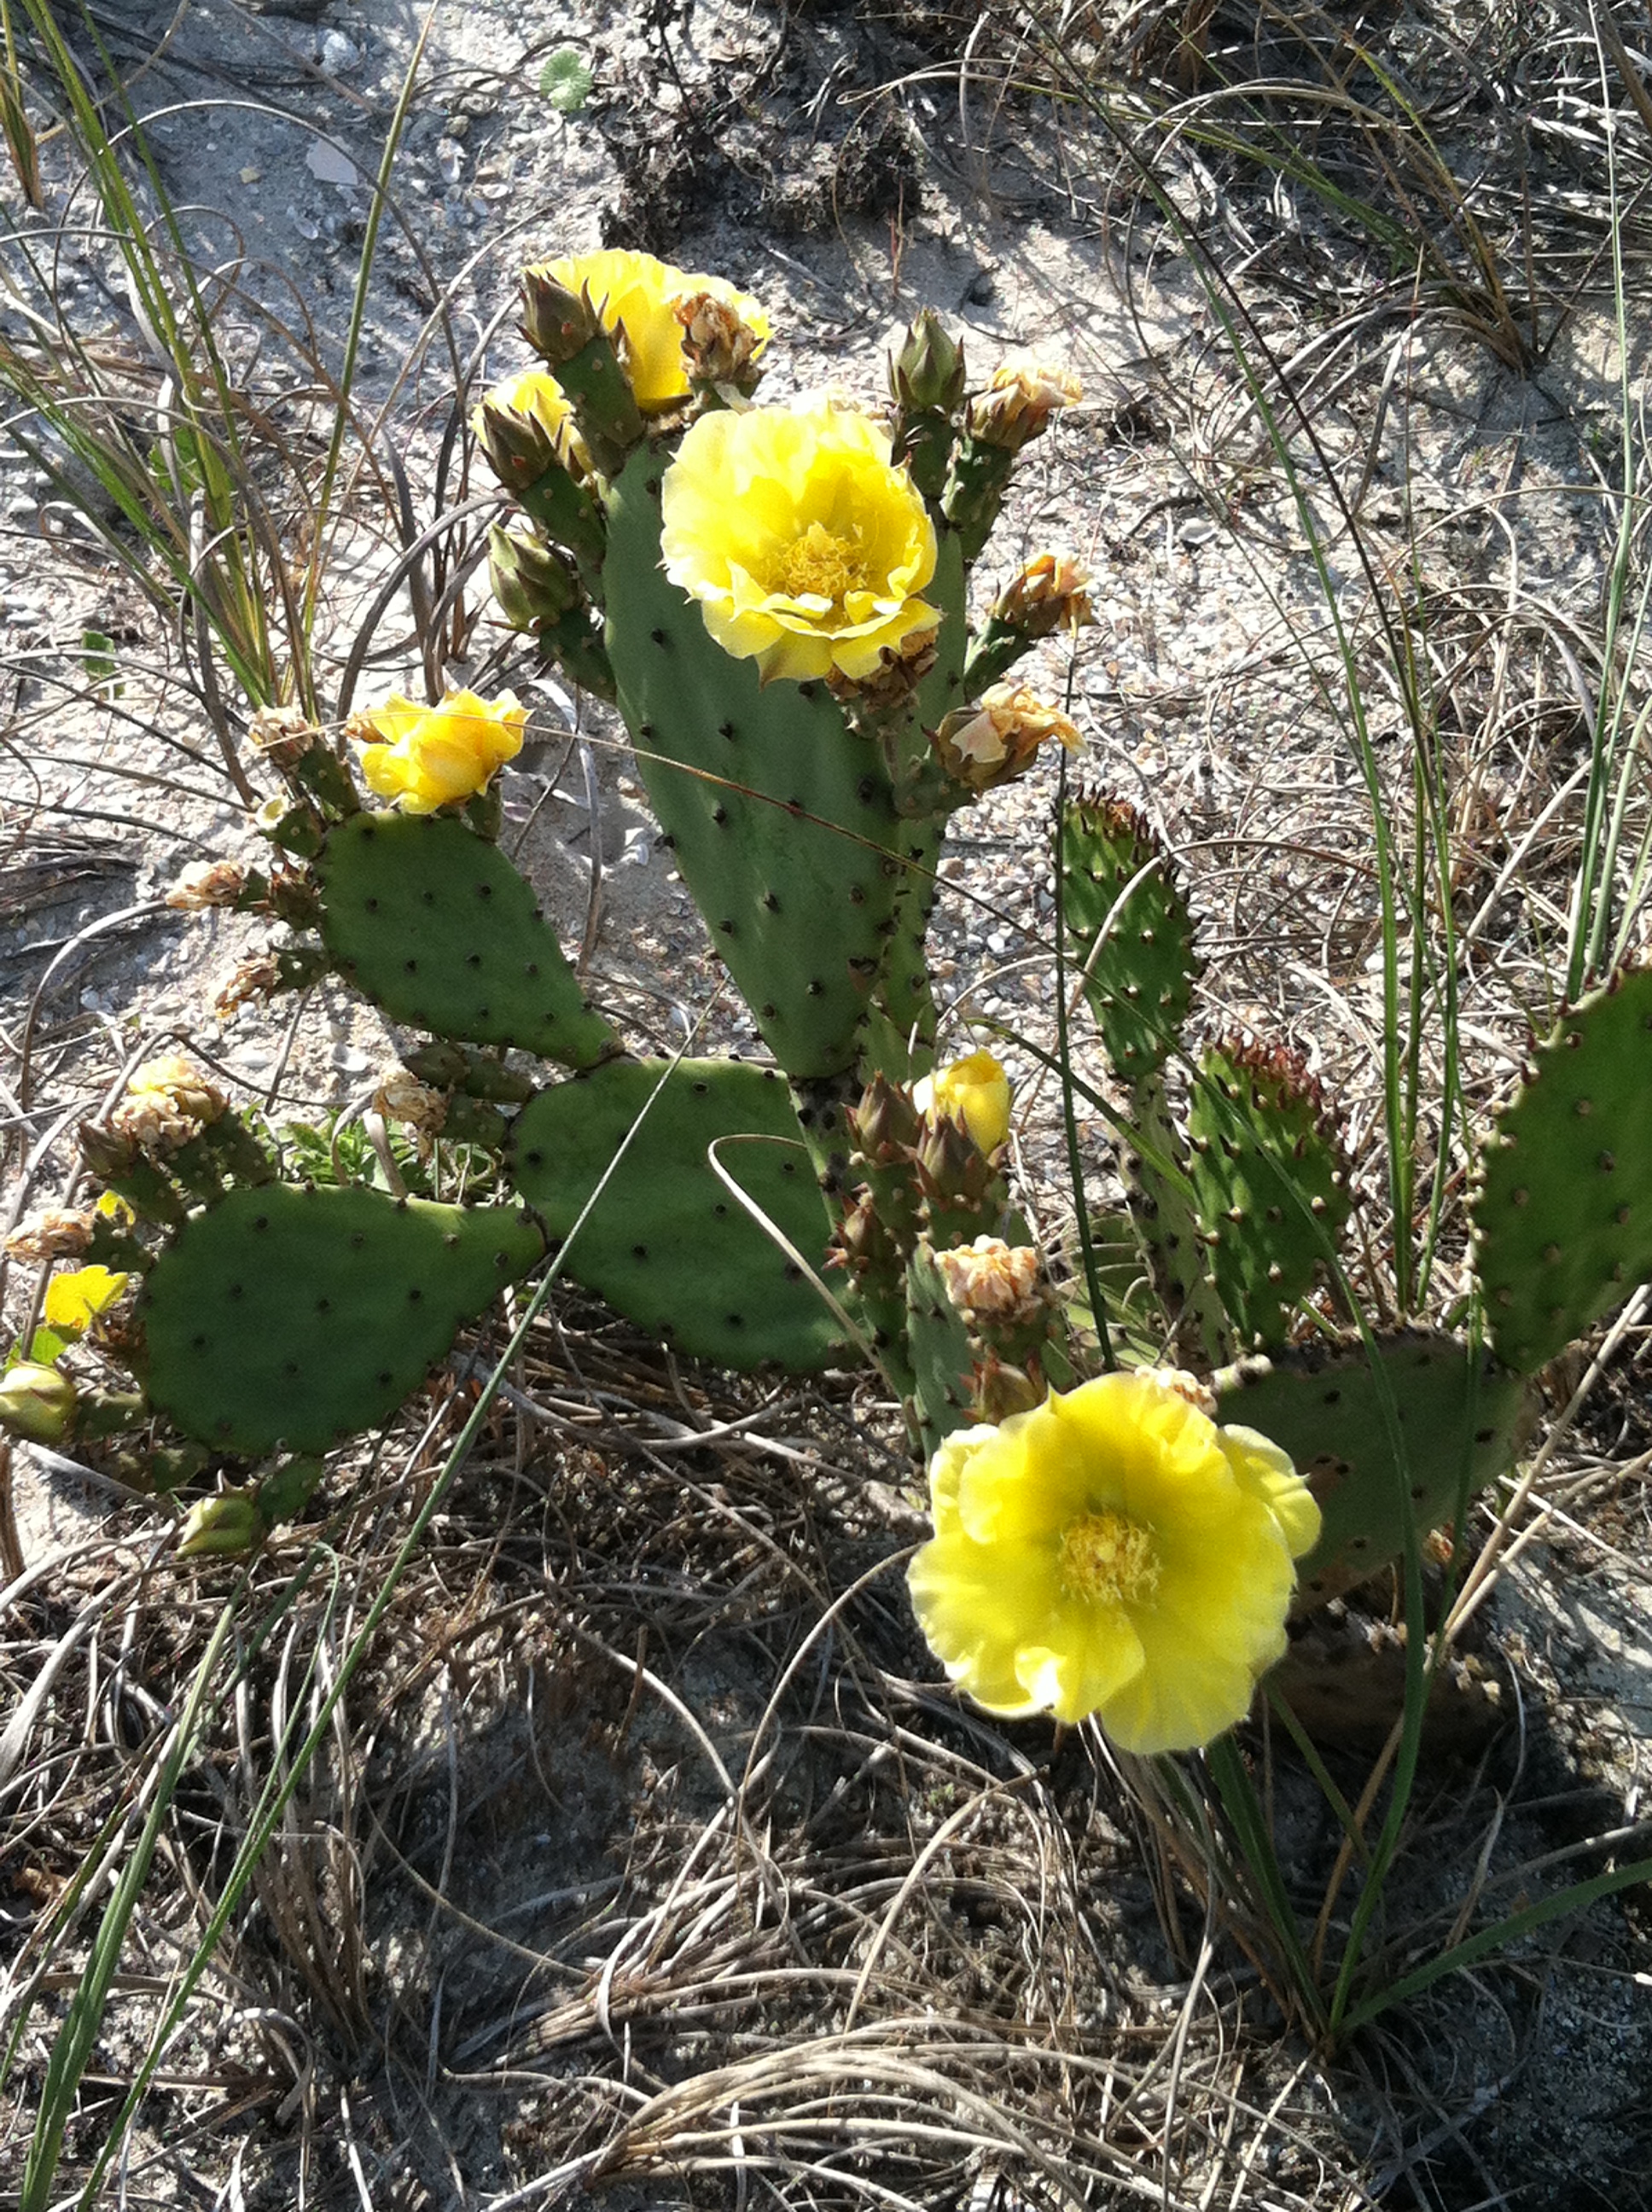 Prickly Pear Cactus in Florida - Florida Family Nature